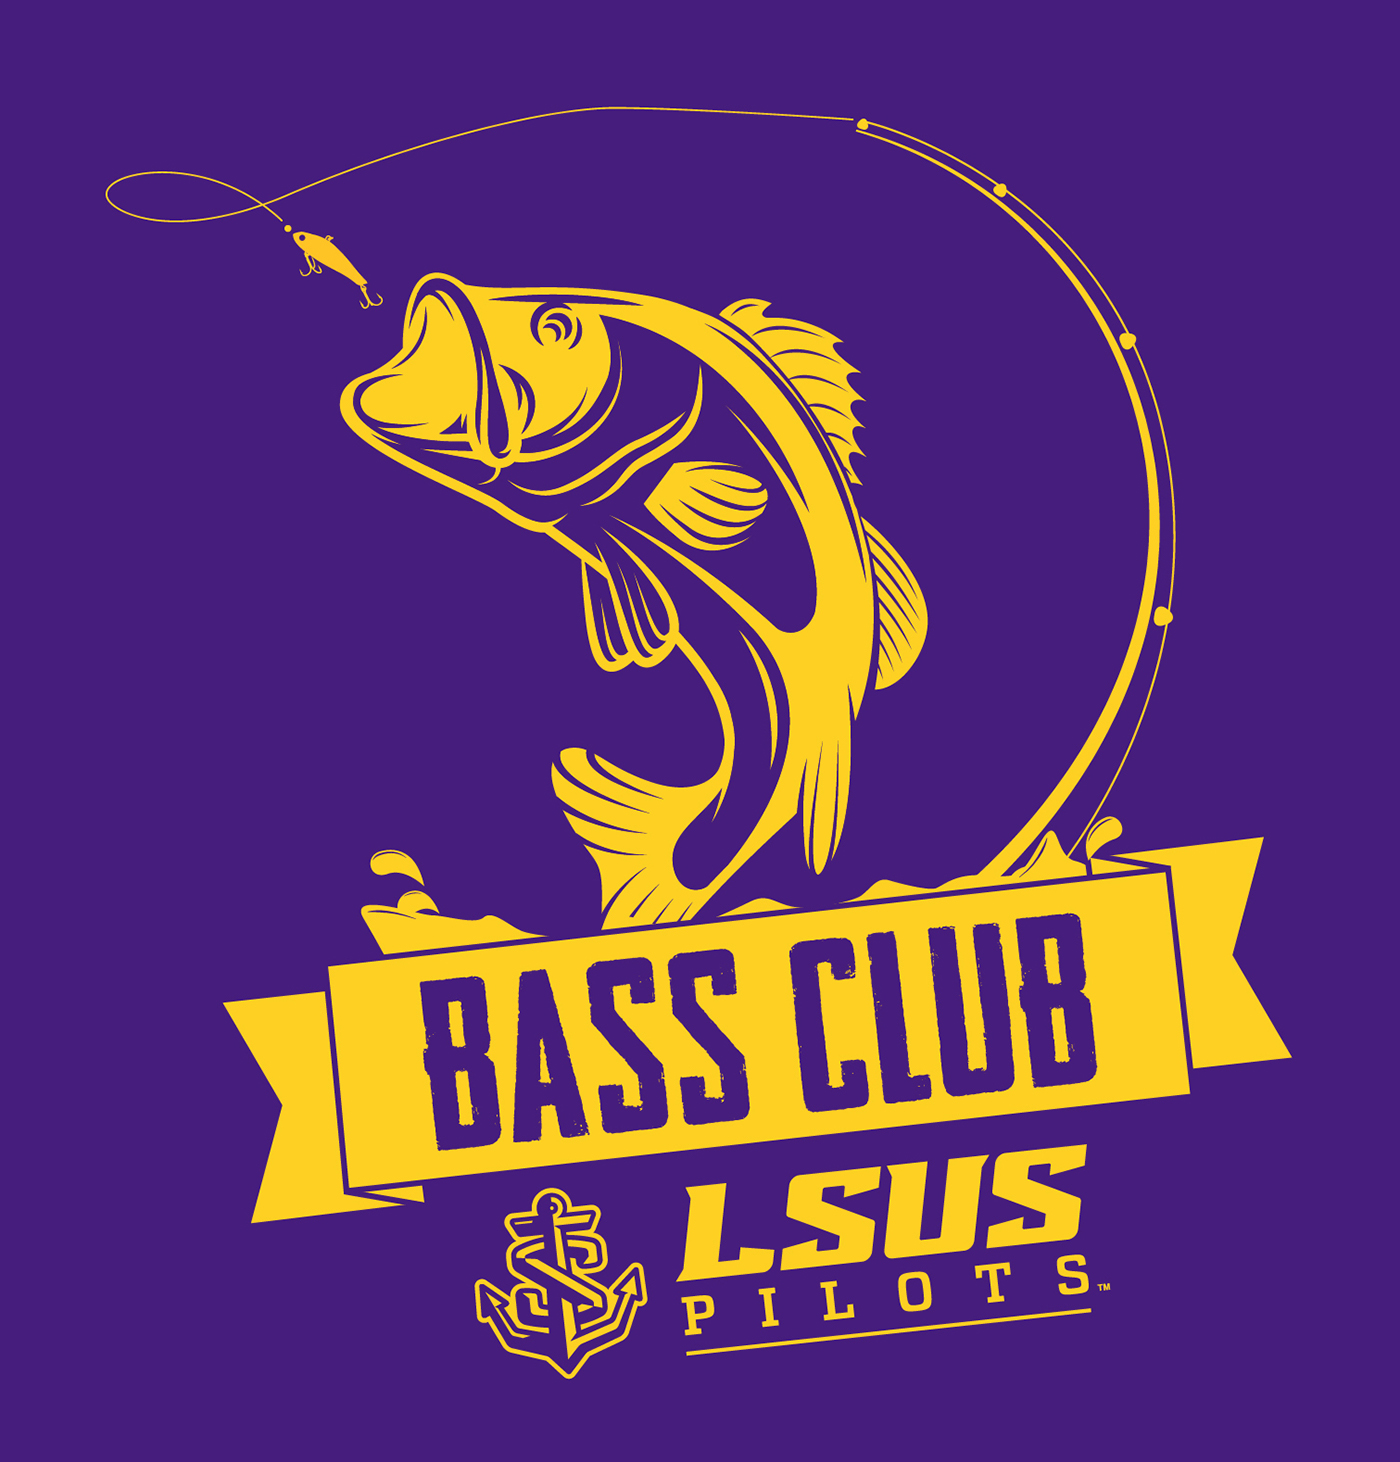 Bass club production